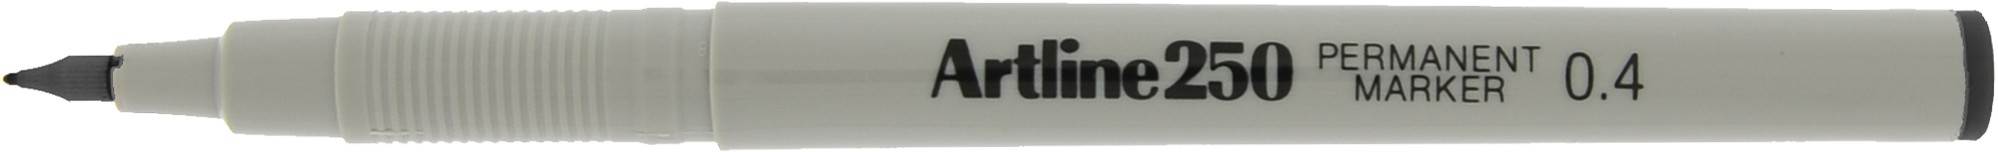 Permanent marker ARTLINE 250, corp plastic, varf rotund 0.4mm - negru